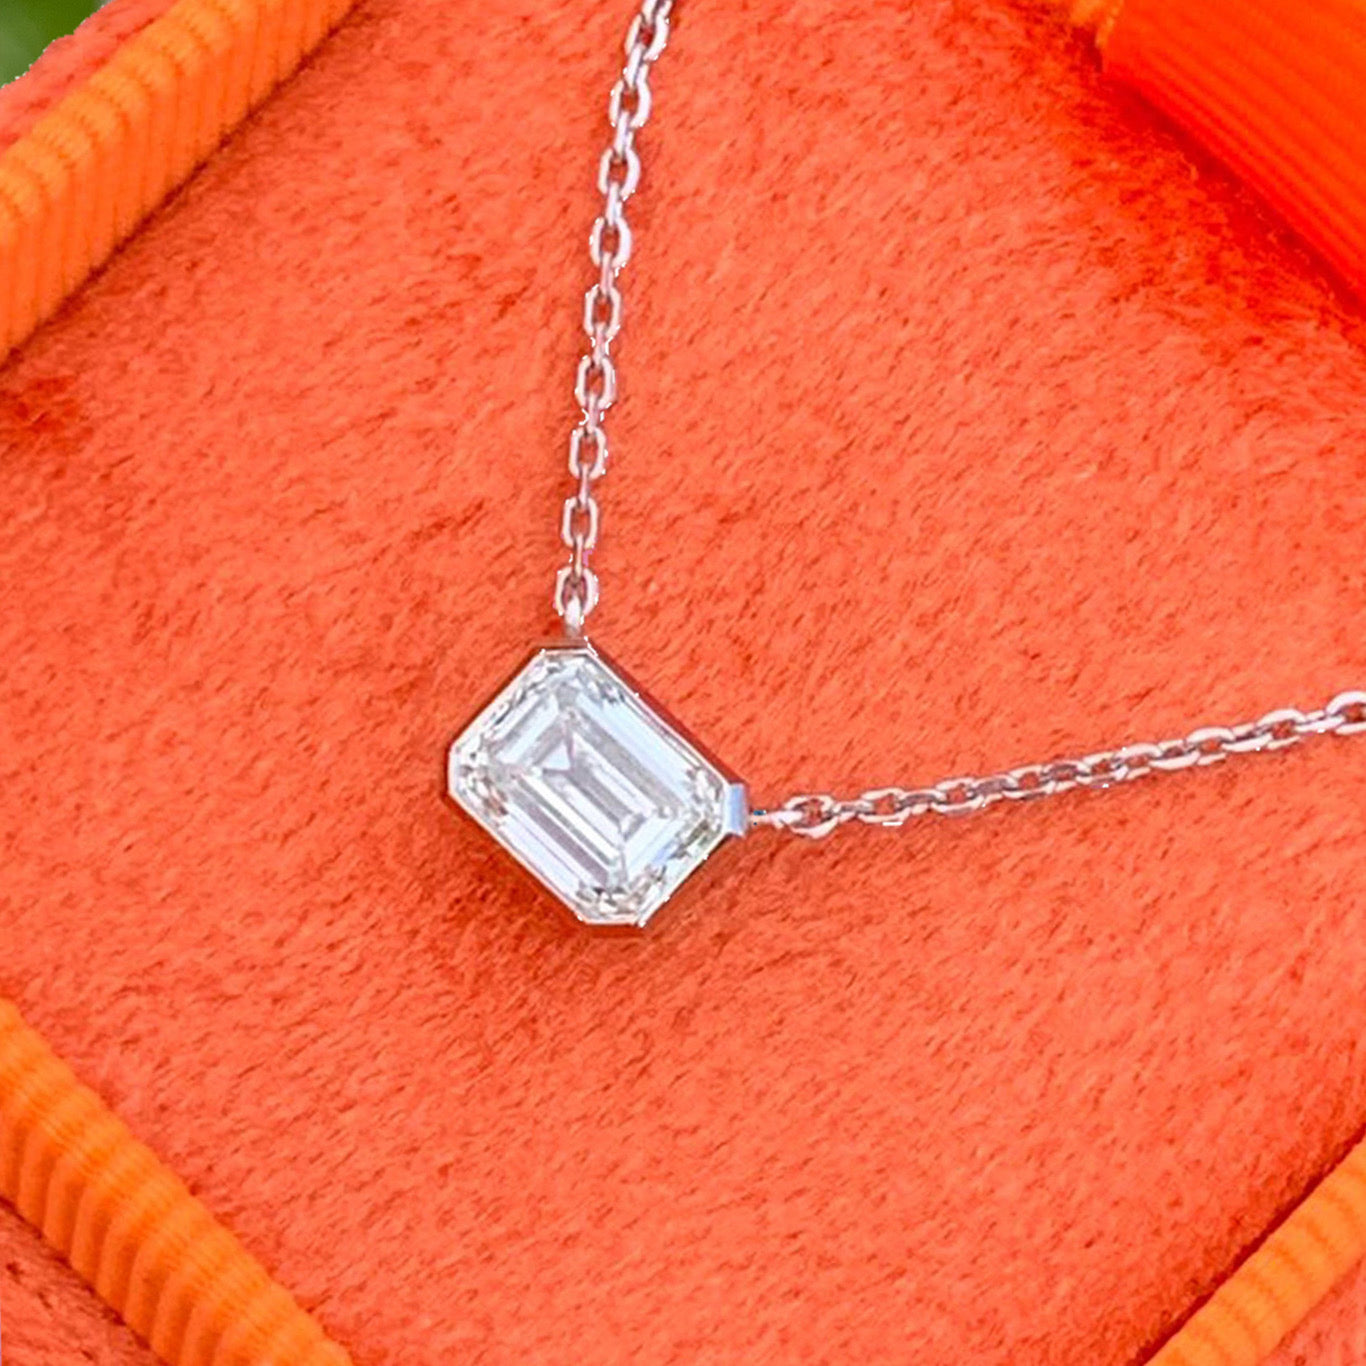 Heritage 2.00ct + Emerald Cut Lab Grown Diamond Solitaire Pendant Necklace, at least F colour / VVS clarity